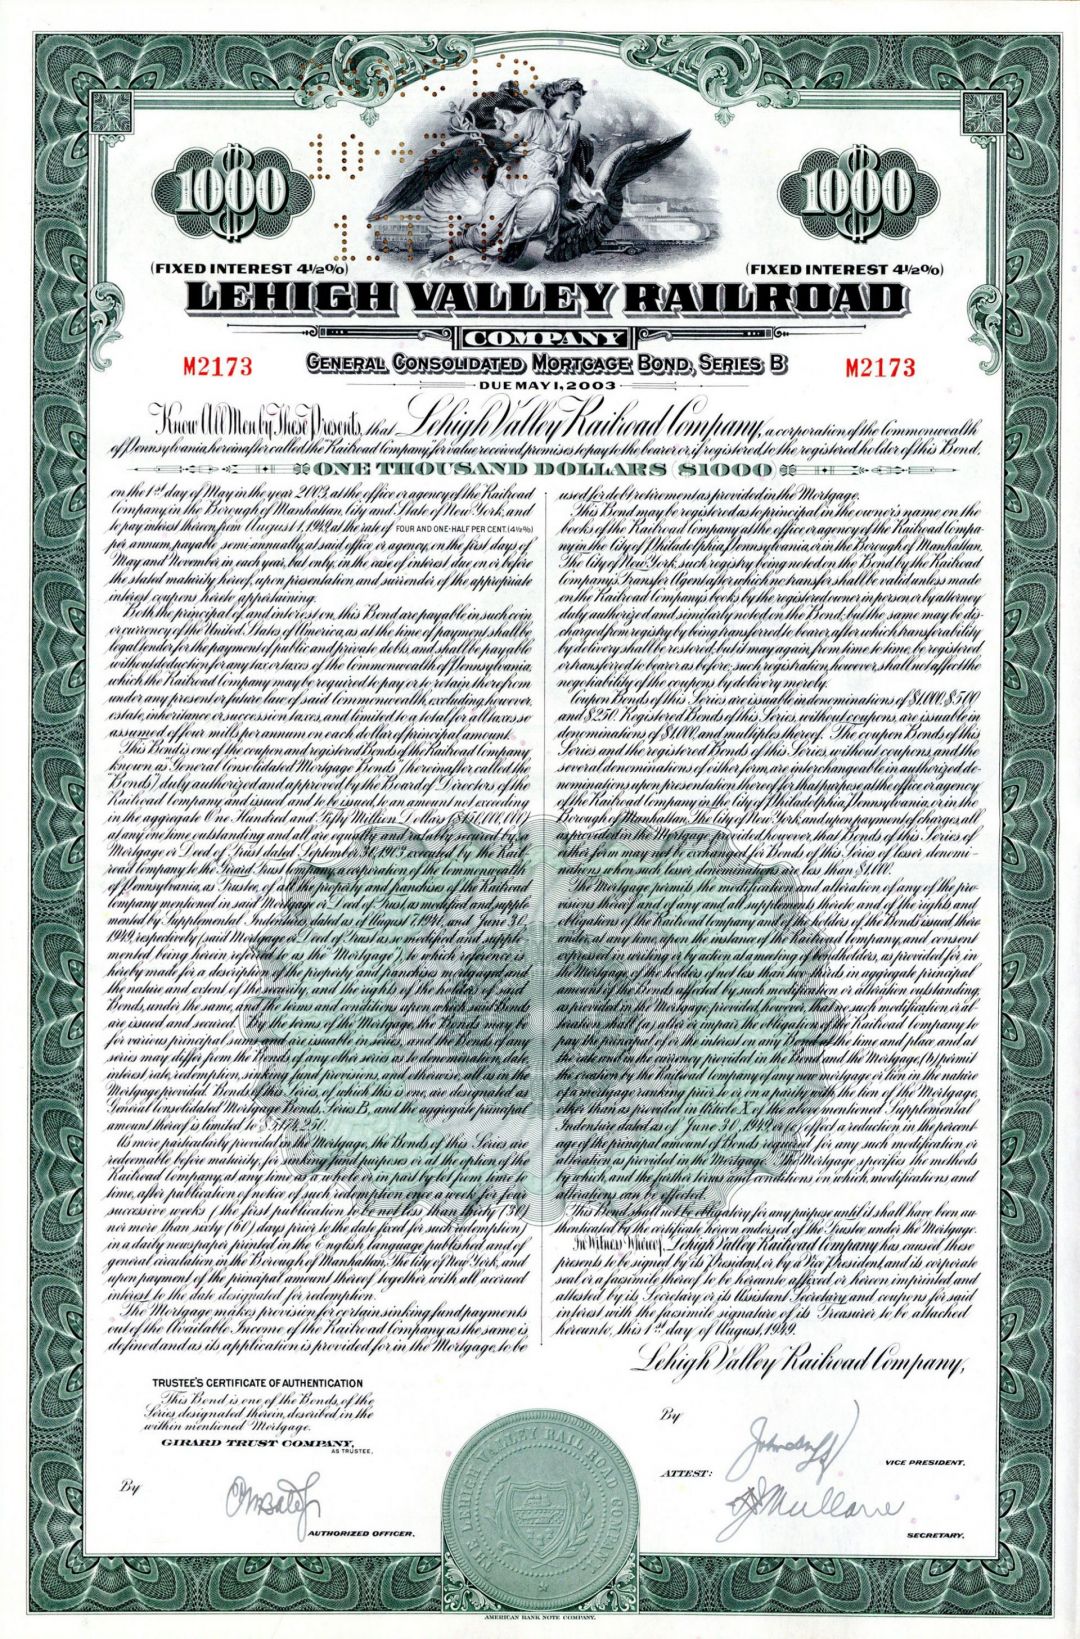 Lehigh Valley Railroad Co. - 1949 dated $1,000 Railway Bond